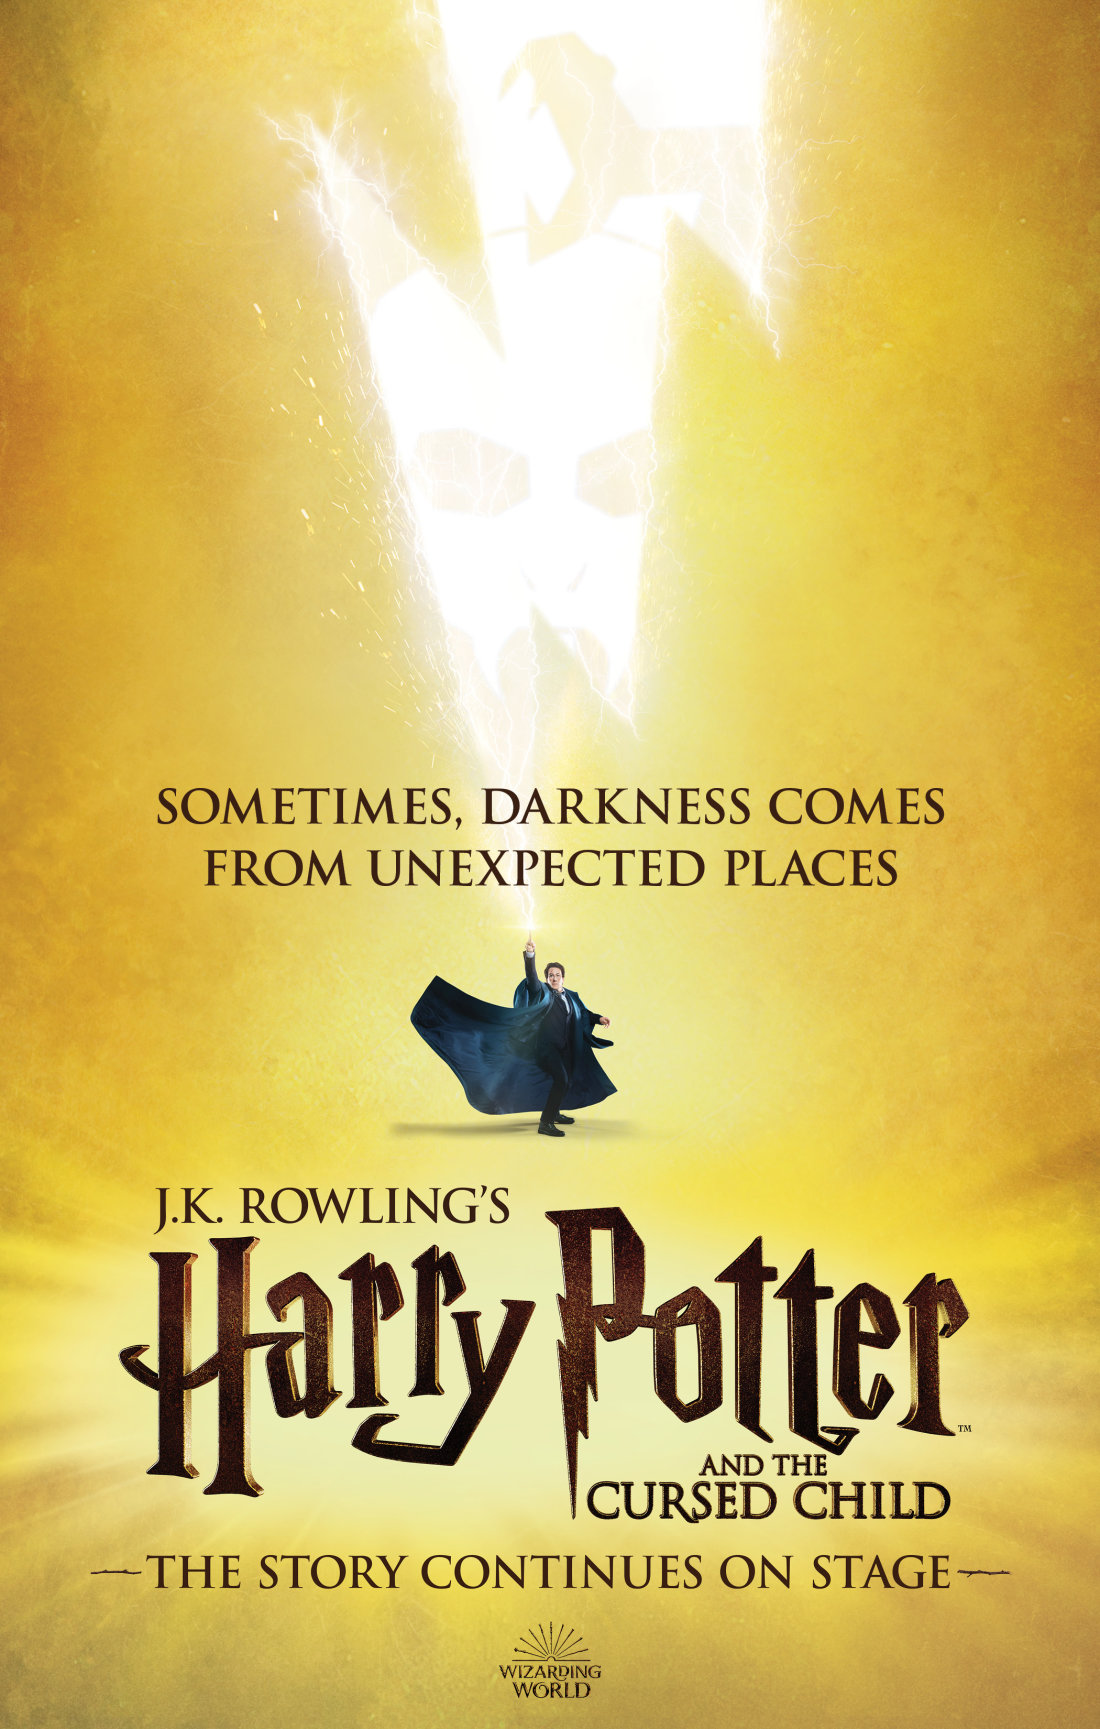 Harry Potter: J.K. Rowling revela motivo de tuíte misterioso - 1